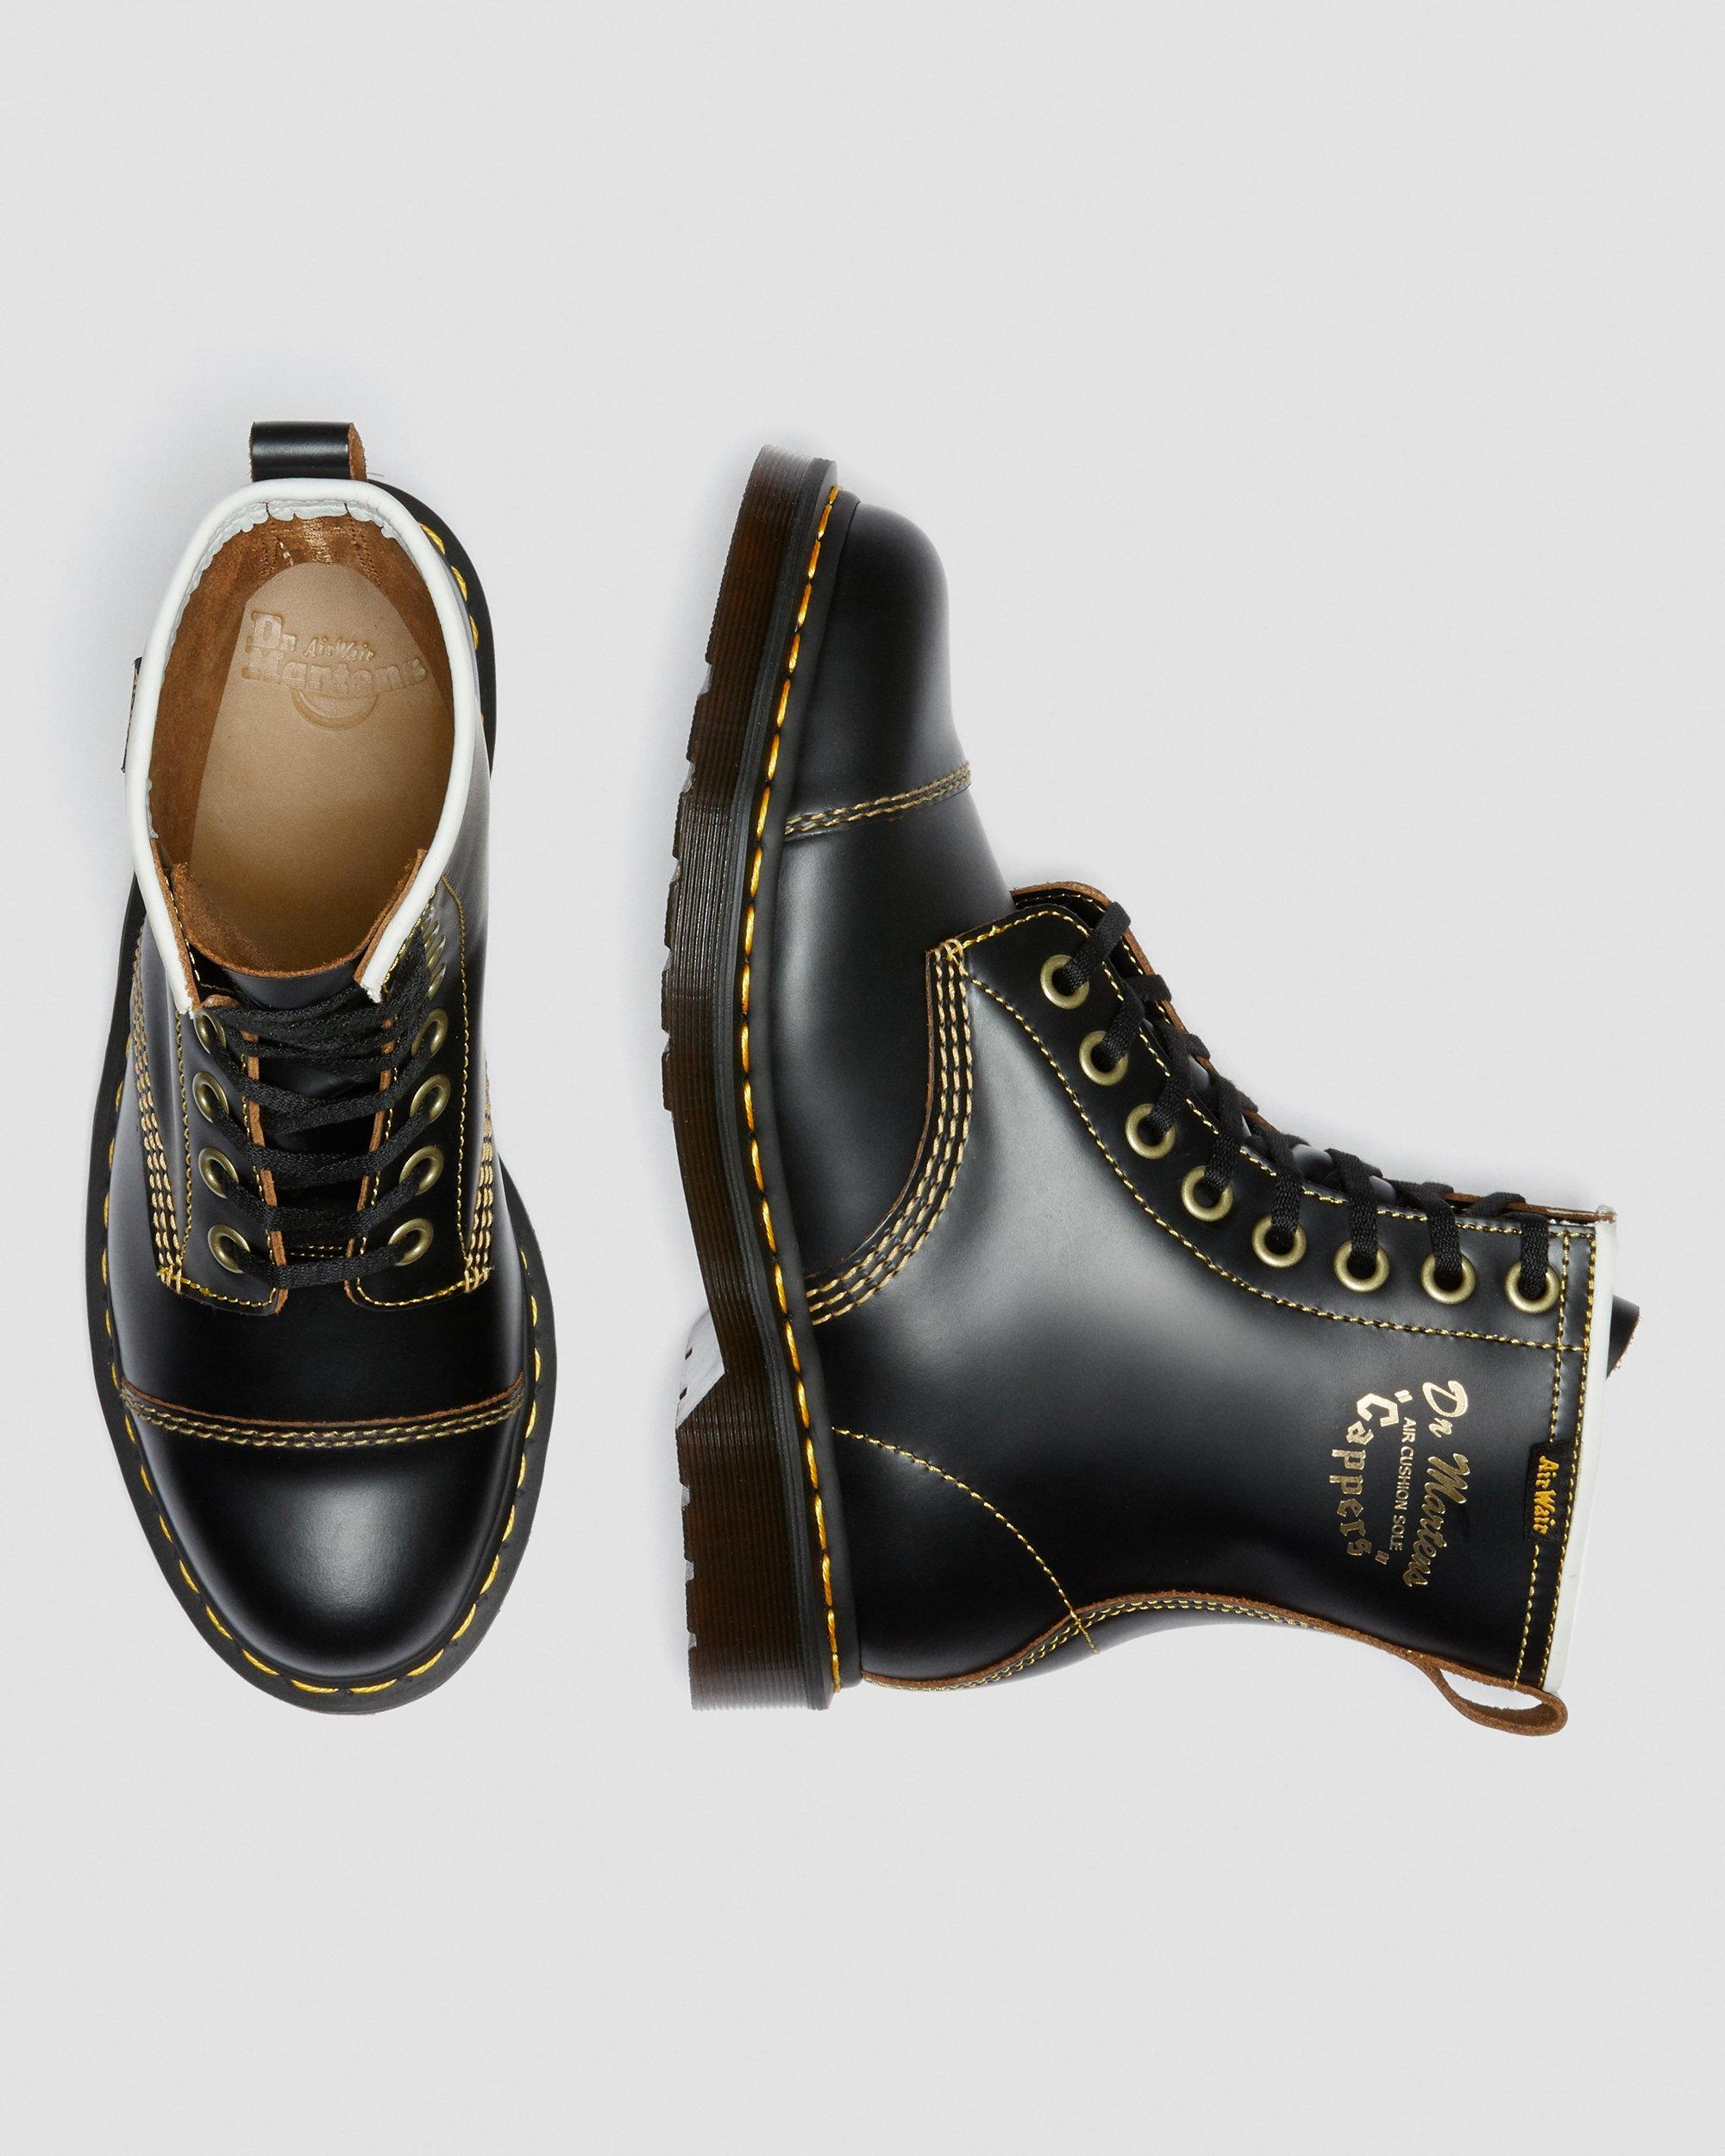 Dr. Martens Capper Vintage Smooth Leather Boots in Black - Lyst